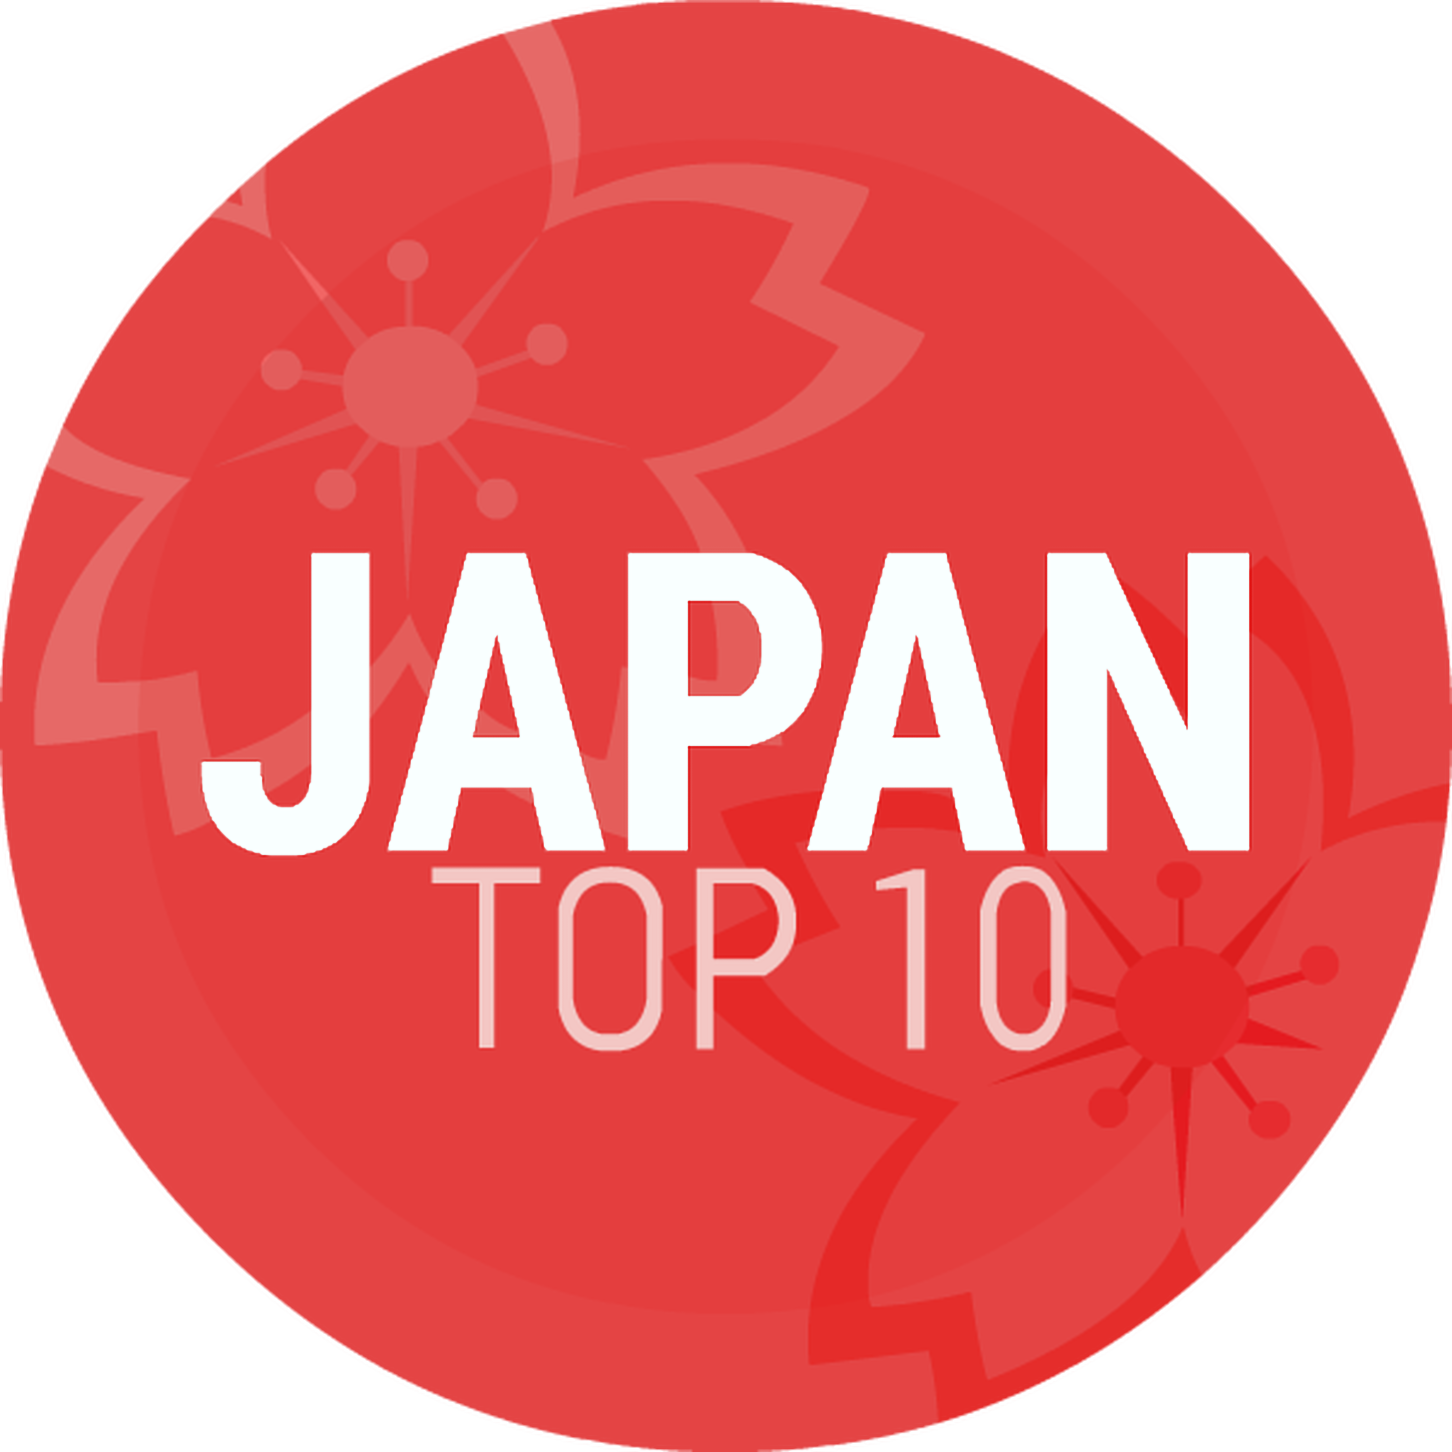 Episode 34: Japan Top 10 Late April 2014 Countdown